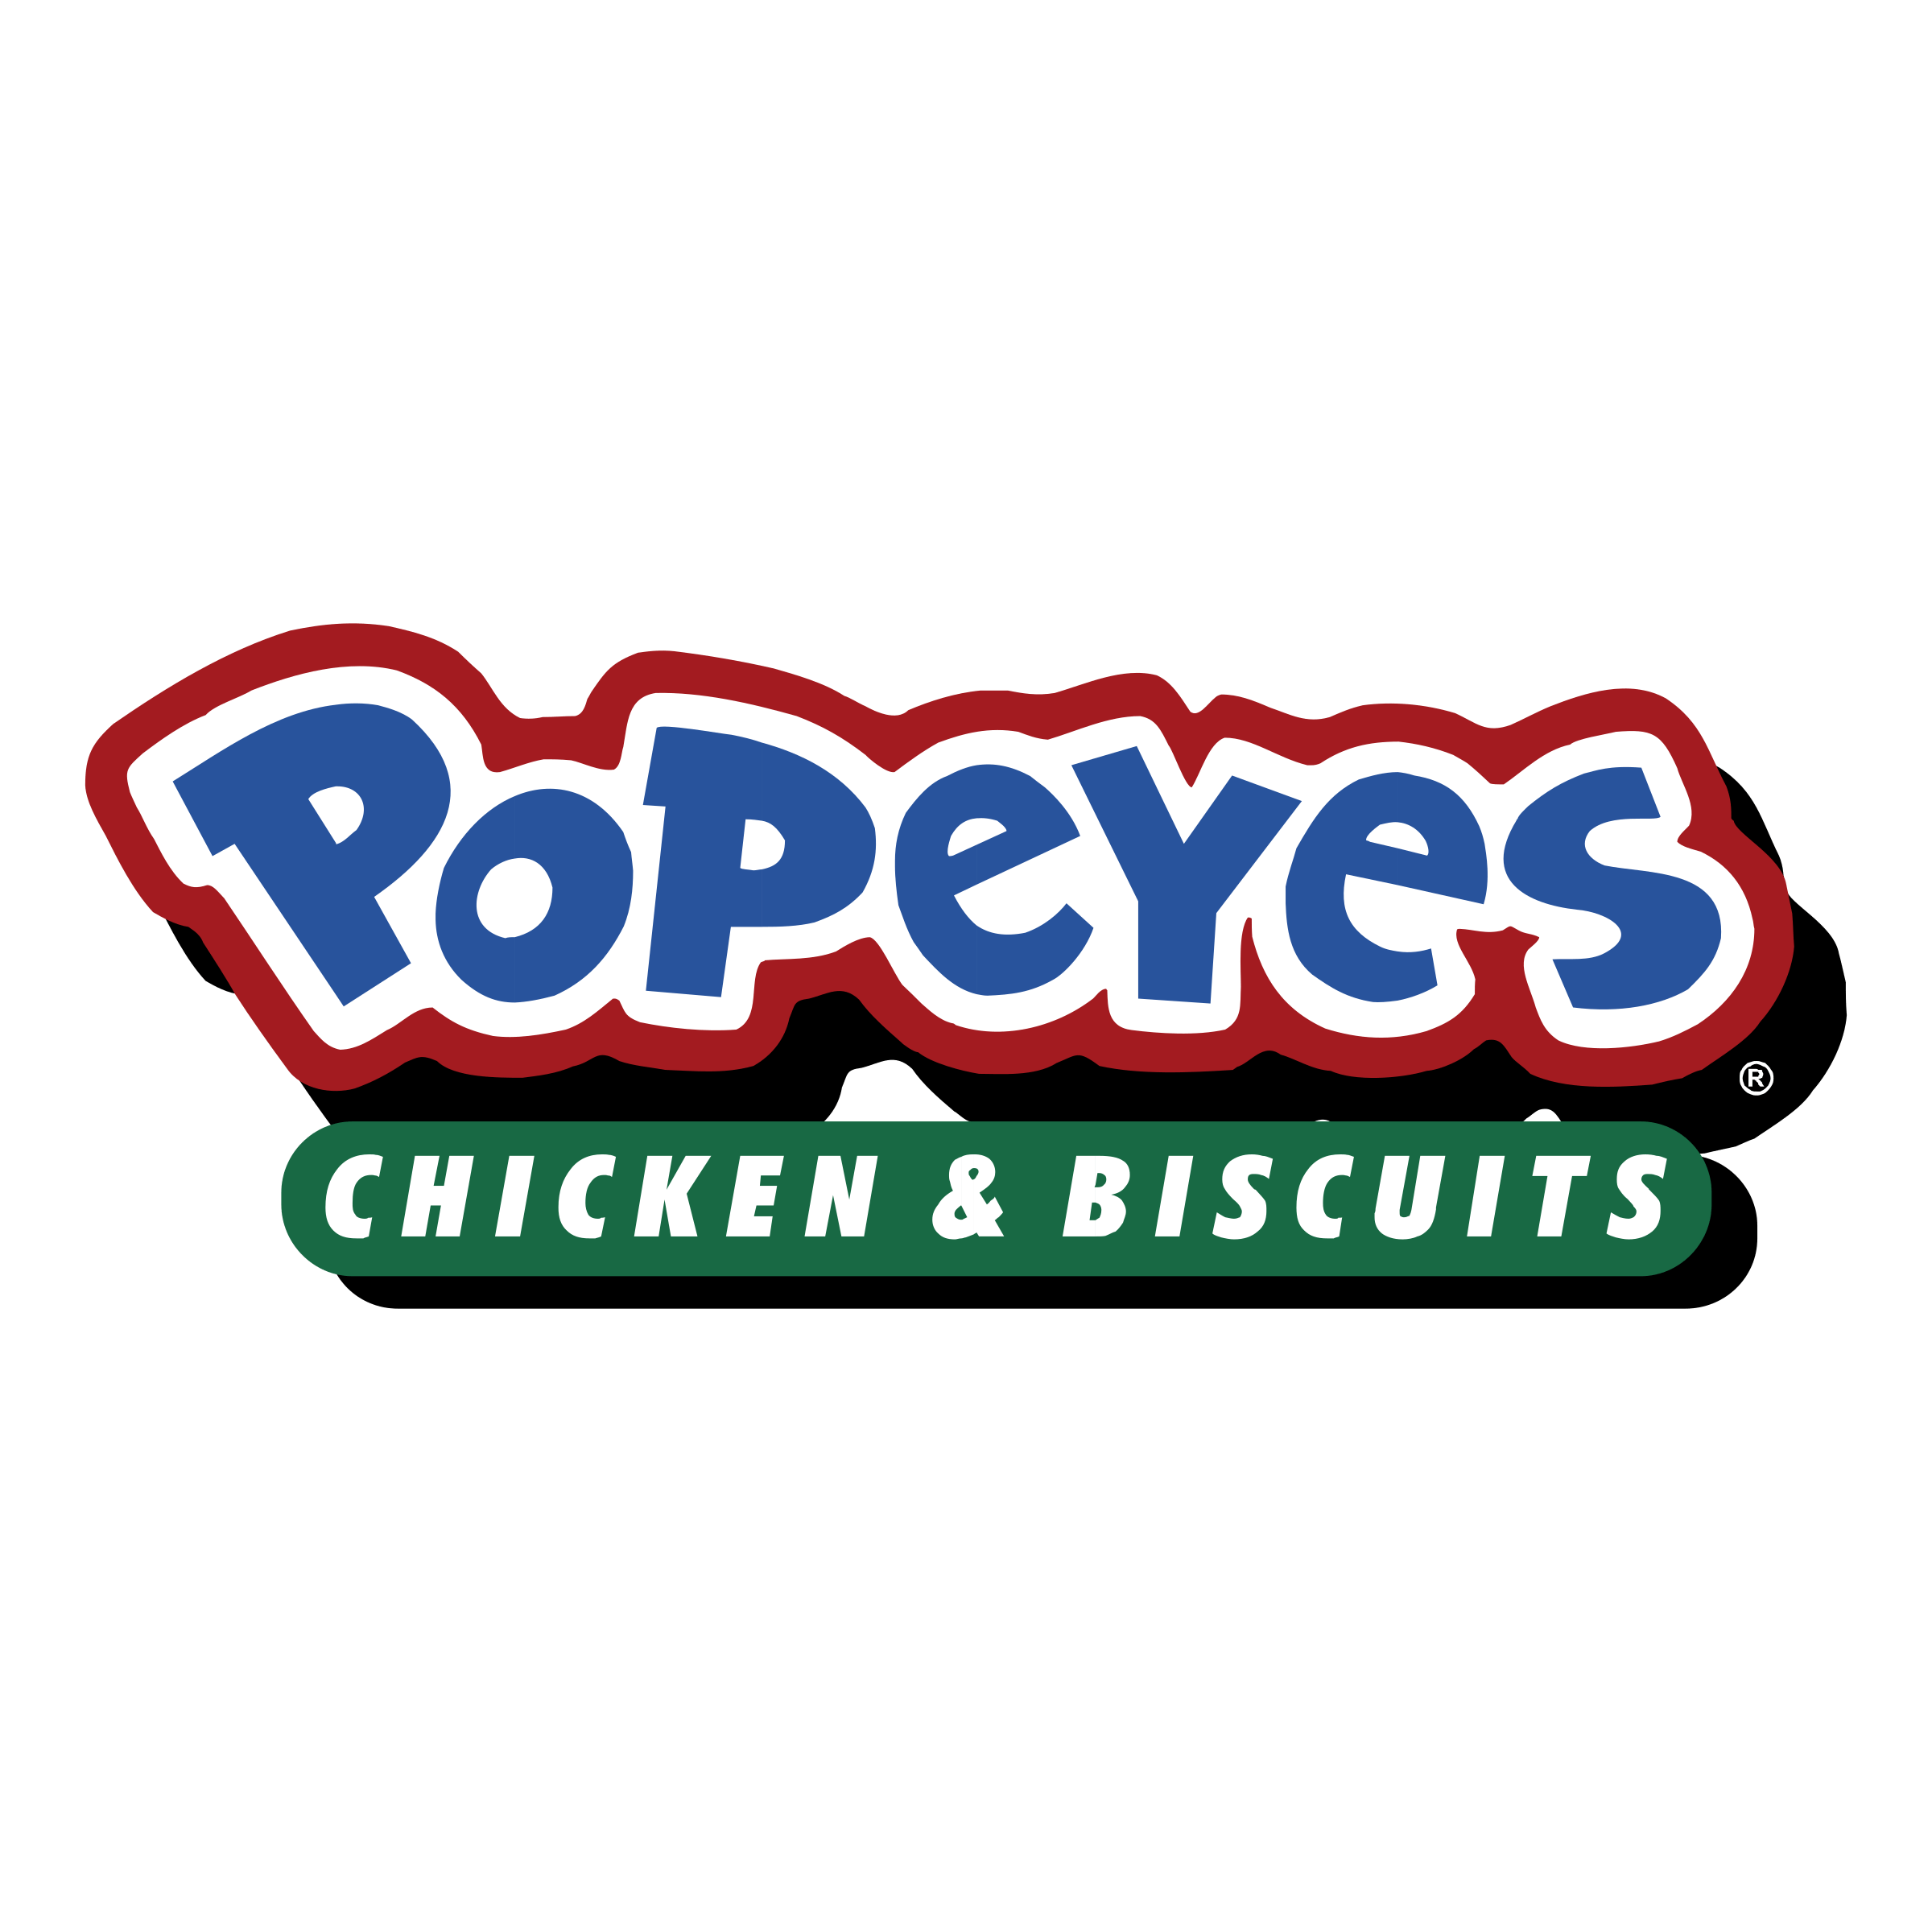 Popeyes Logo - Popeyes Logo PNG Transparent & SVG Vector